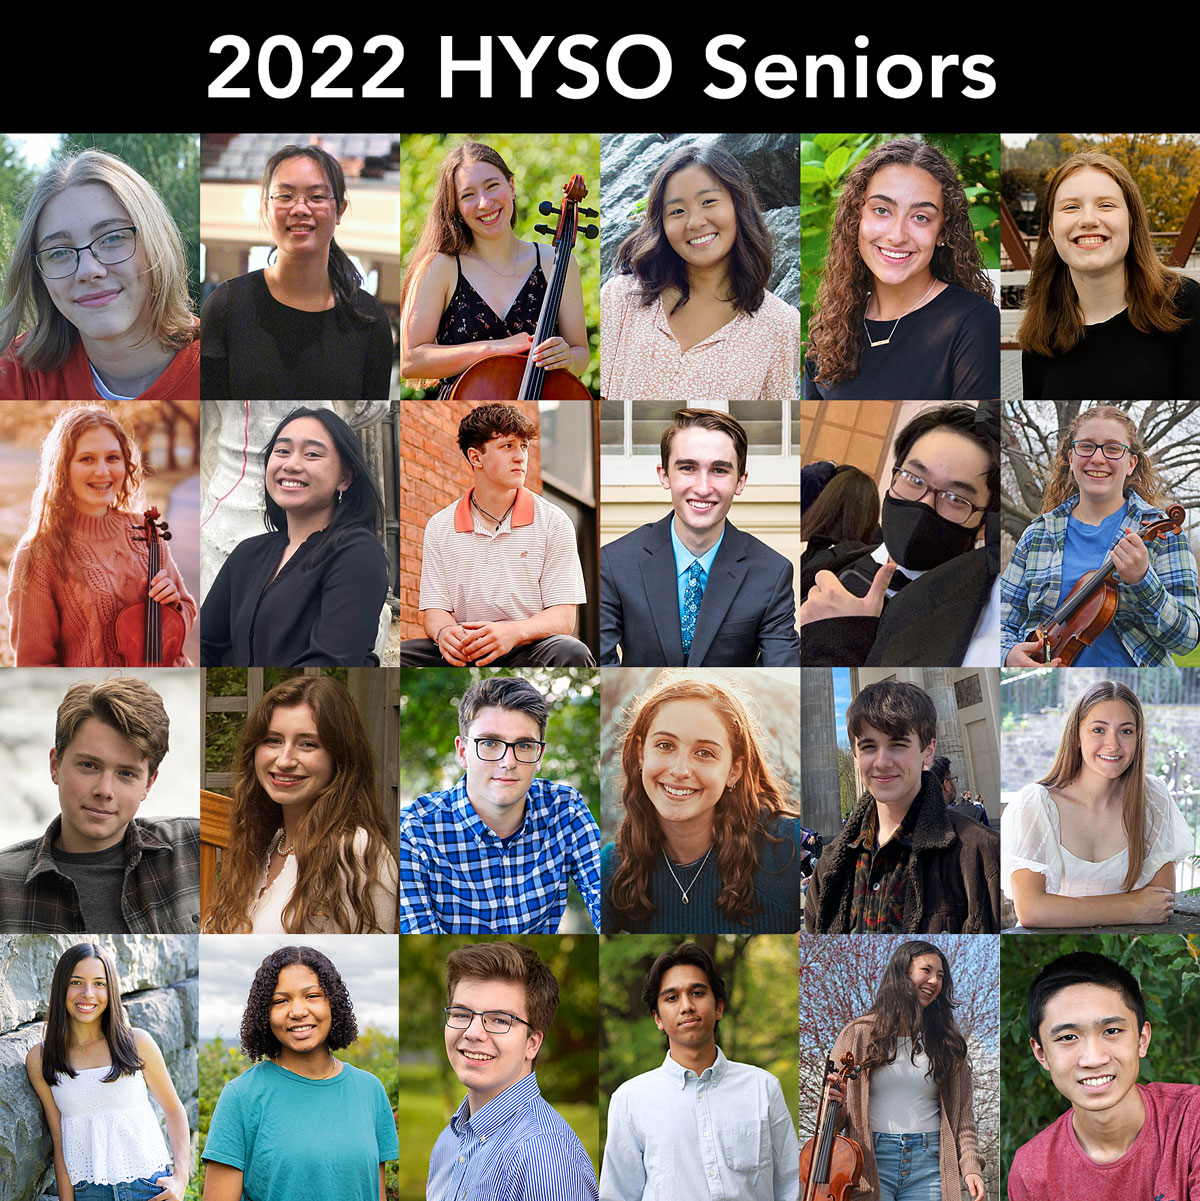 Congratulations to the HYSO Seniors!